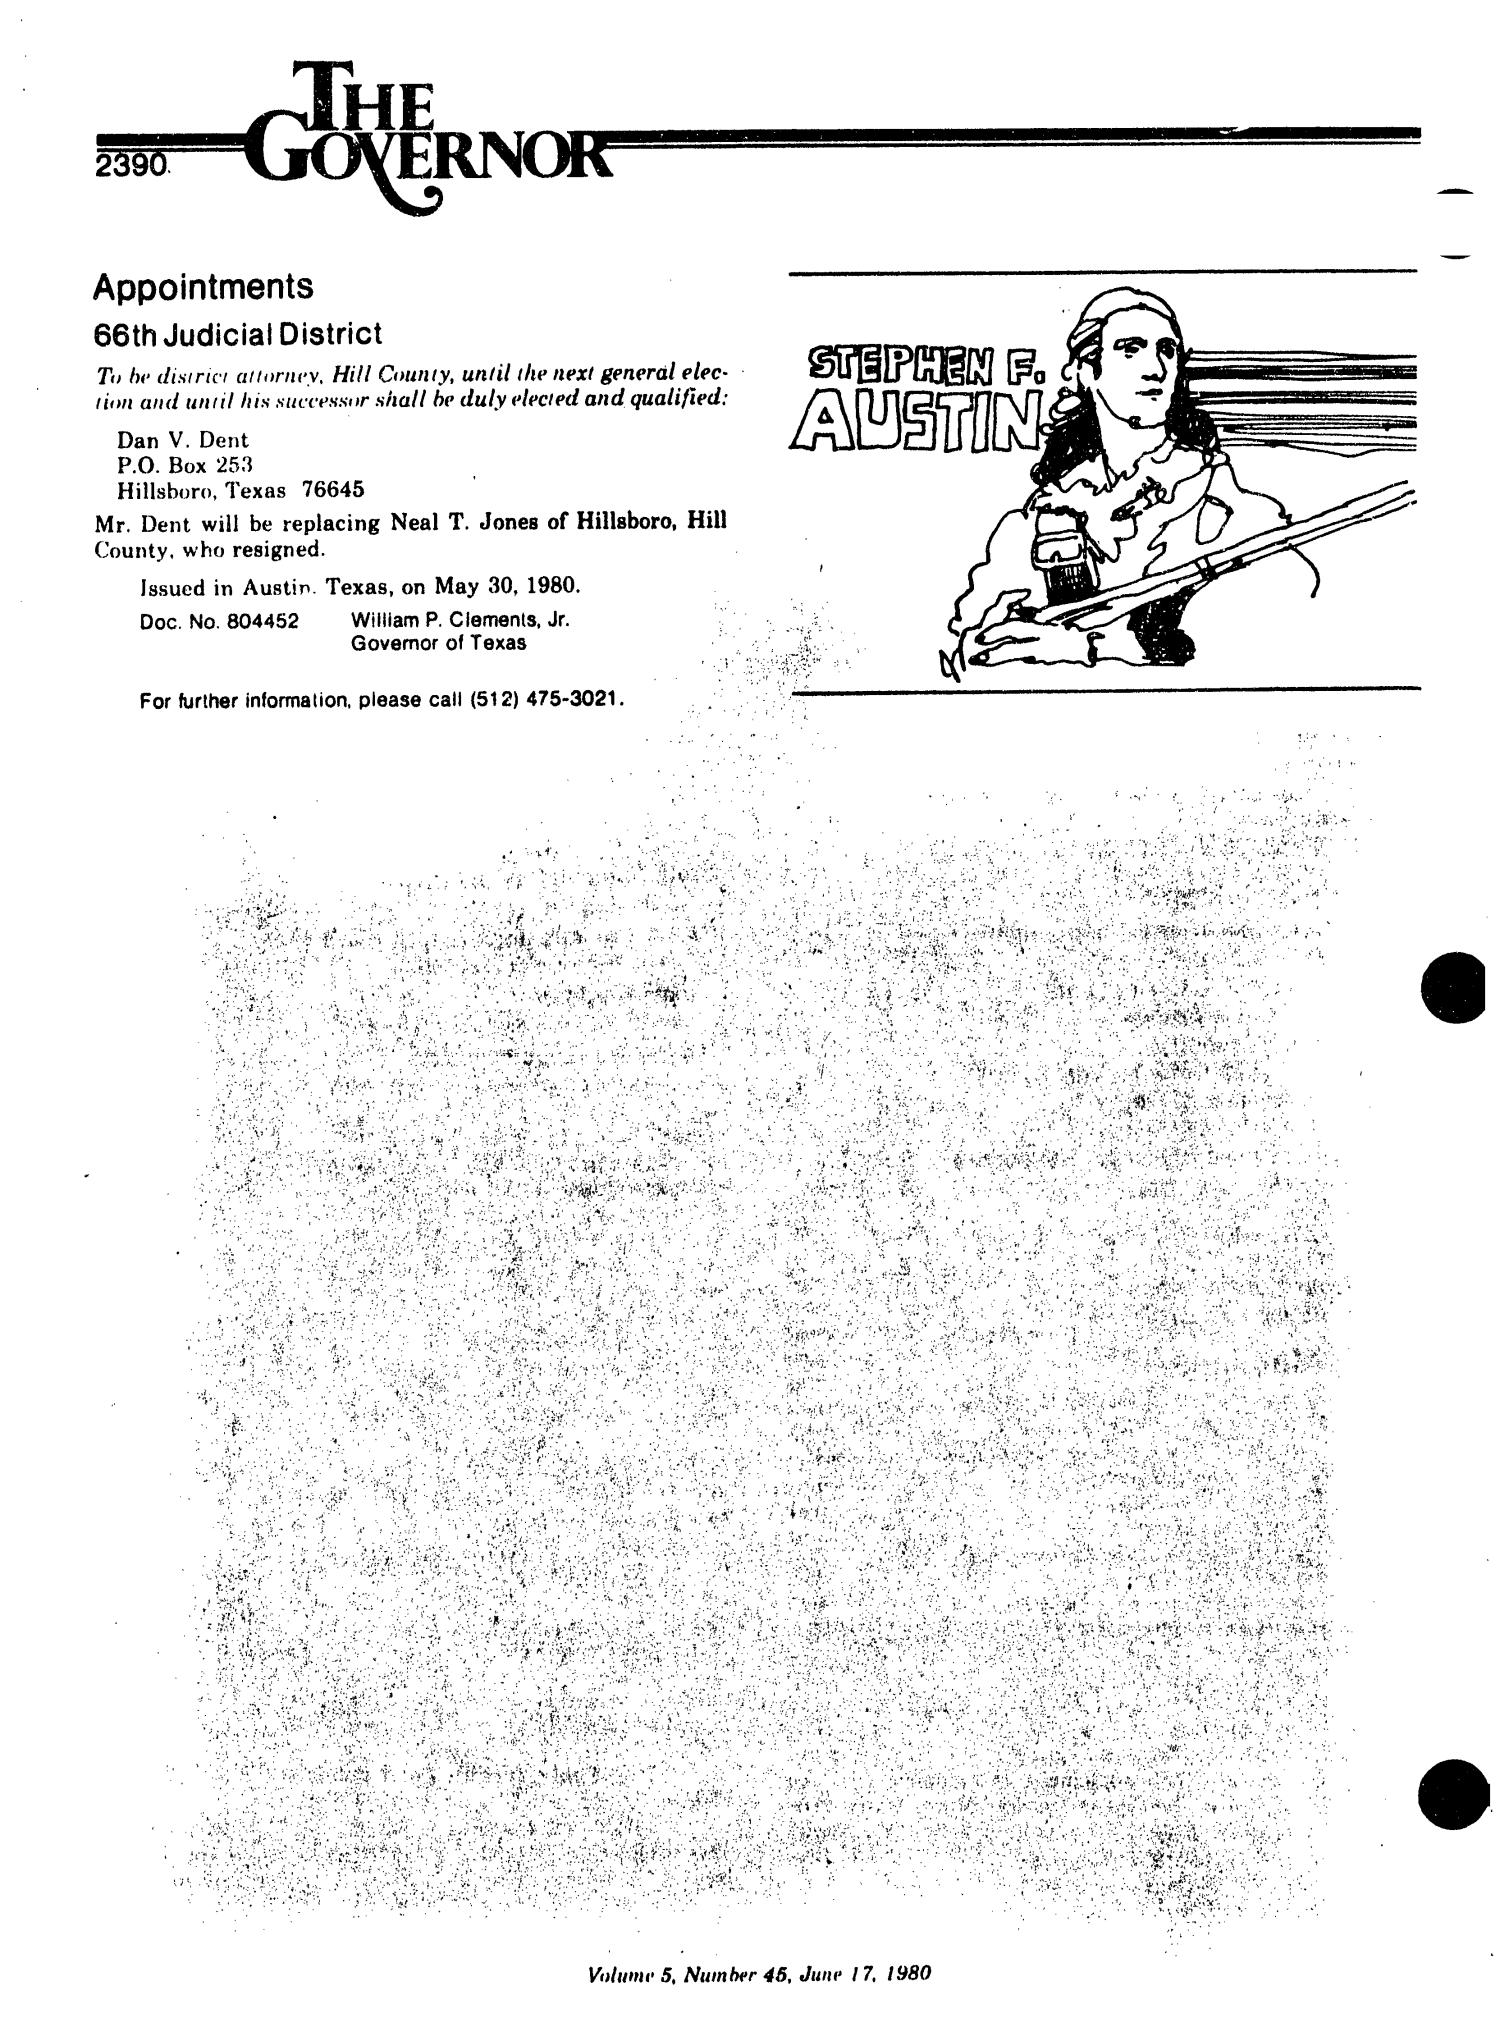 Texas Register, Volume 5, Number 45, Pages 2387-2428, June 17, 1980
                                                
                                                    2390
                                                